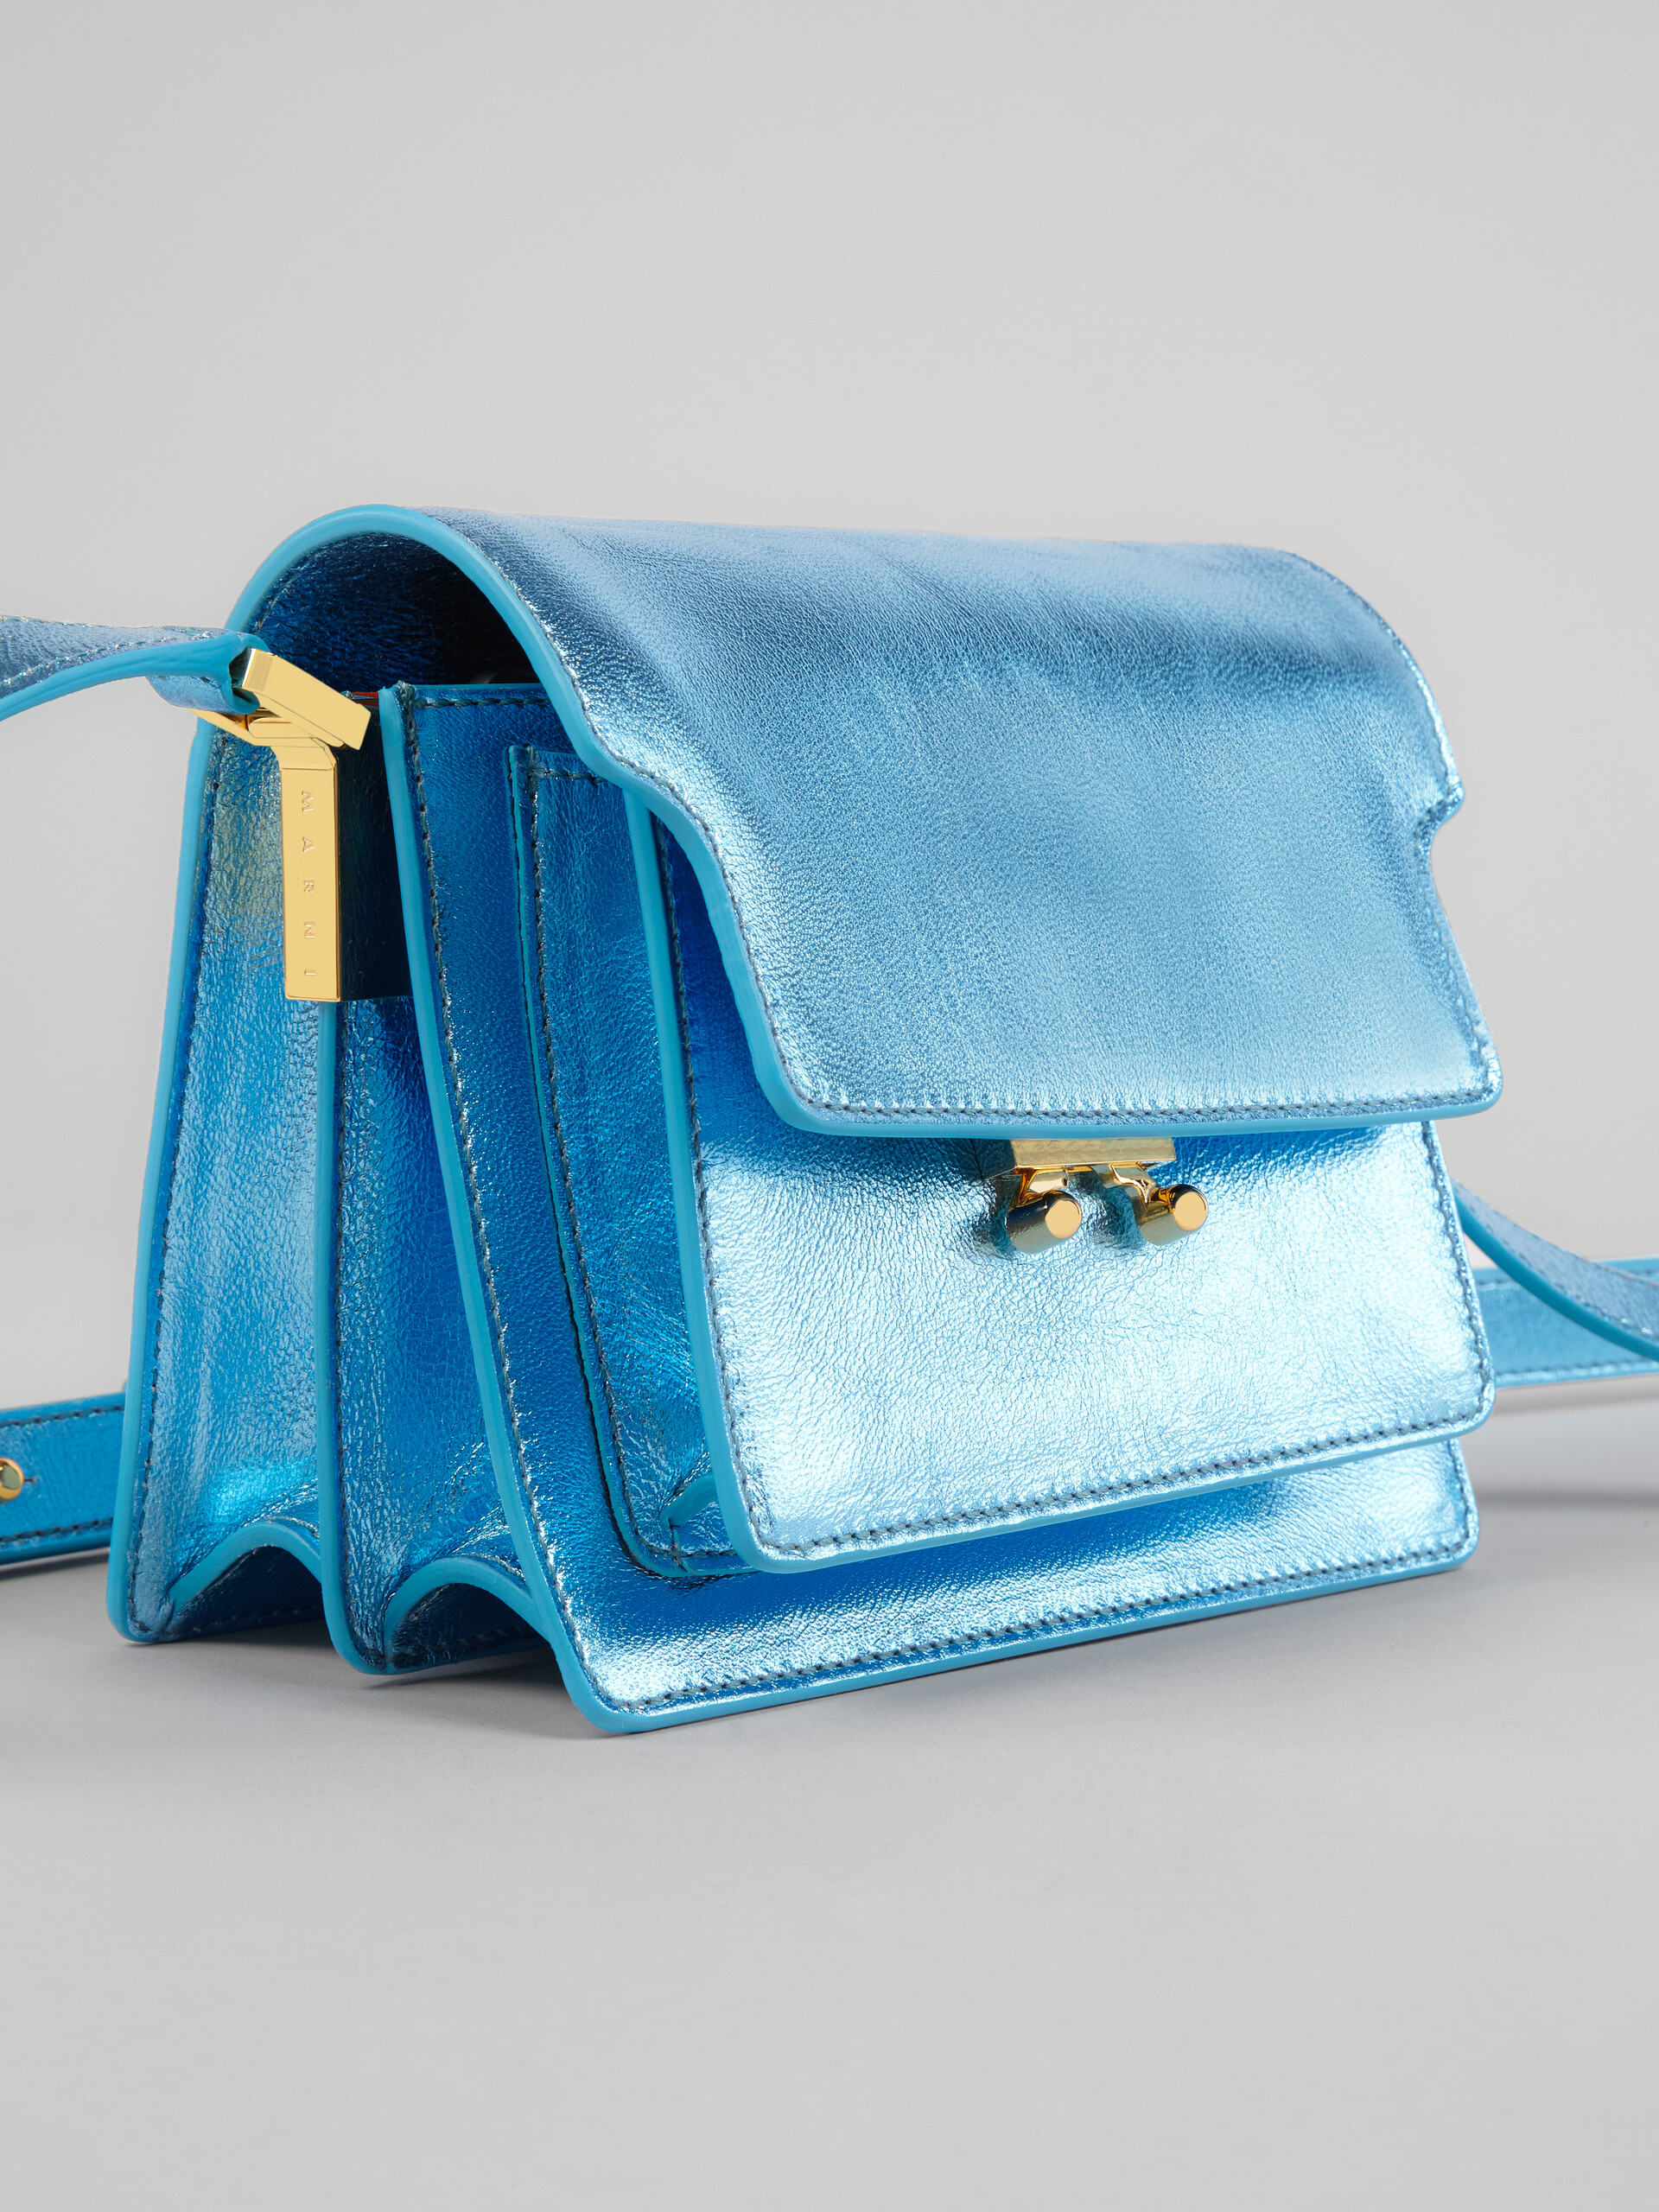 TRUNK SOFT mini bag in blue metallic leather - Shoulder Bags - Image 3